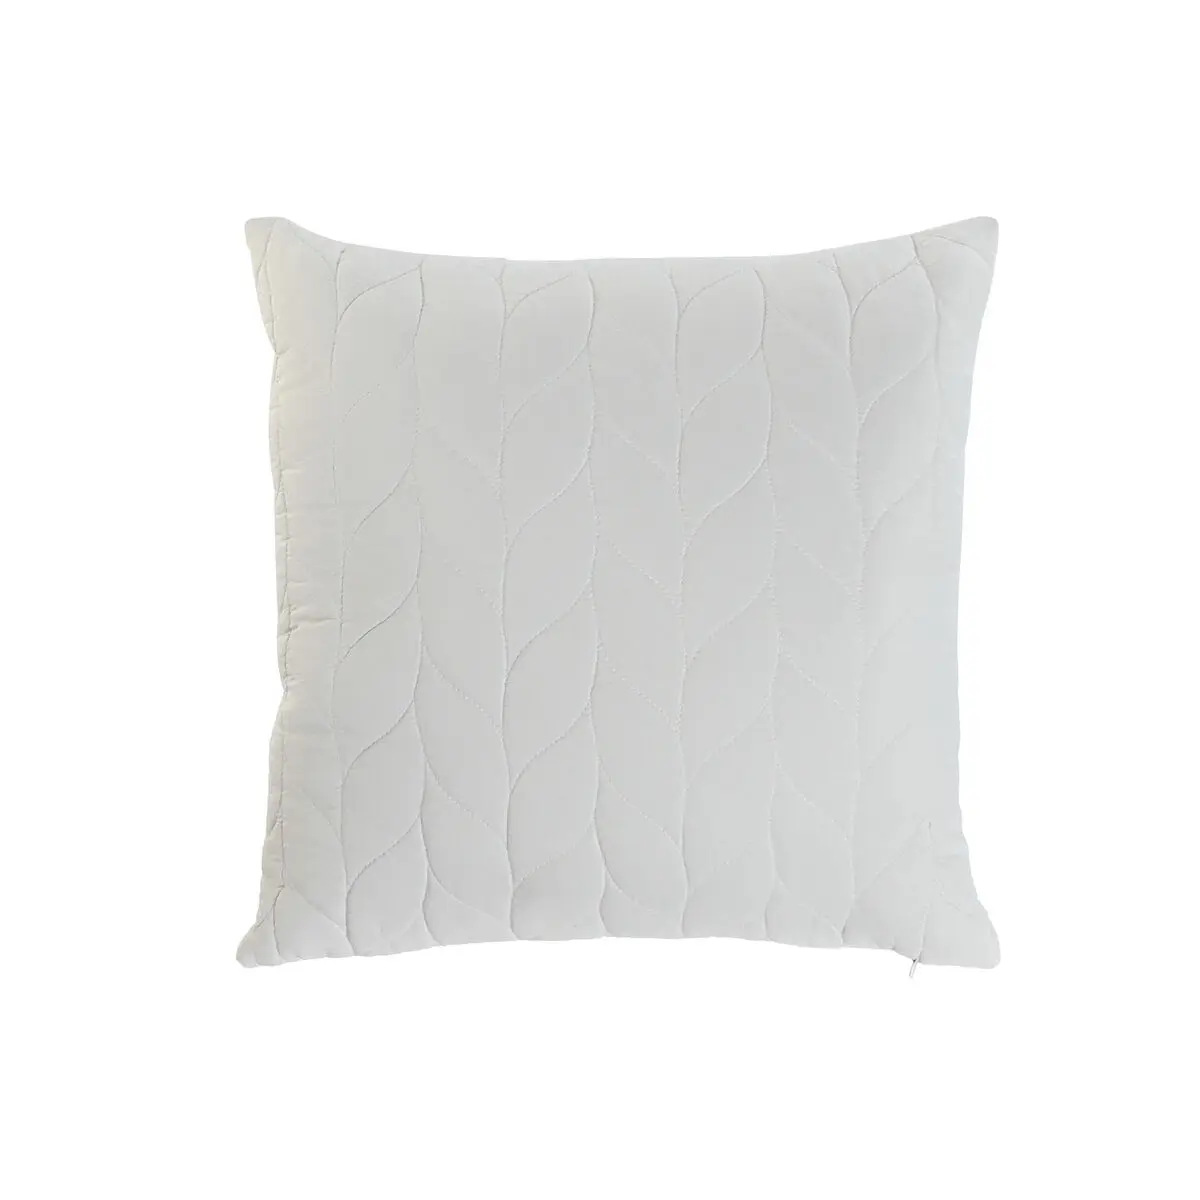 Cuscino Home ESPRIT Bianco 45 x 45 cm